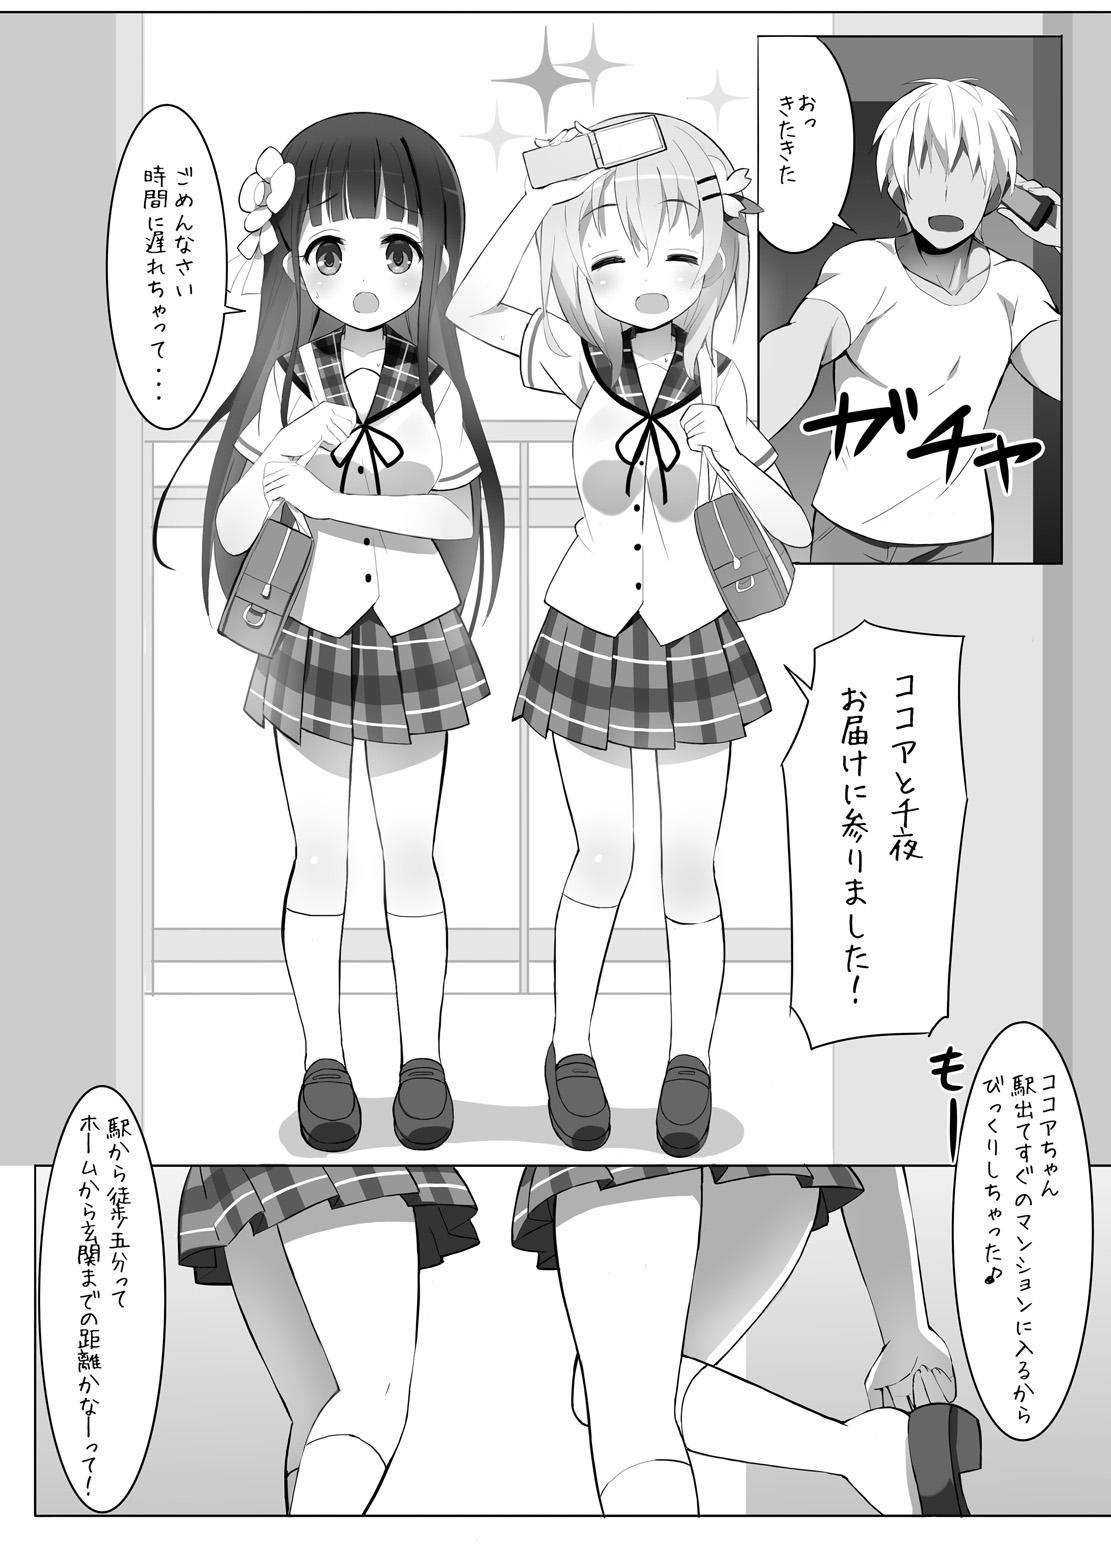 Fit Delivery Cafe - Gochuumon wa usagi desu ka Tiny Girl - Page 2